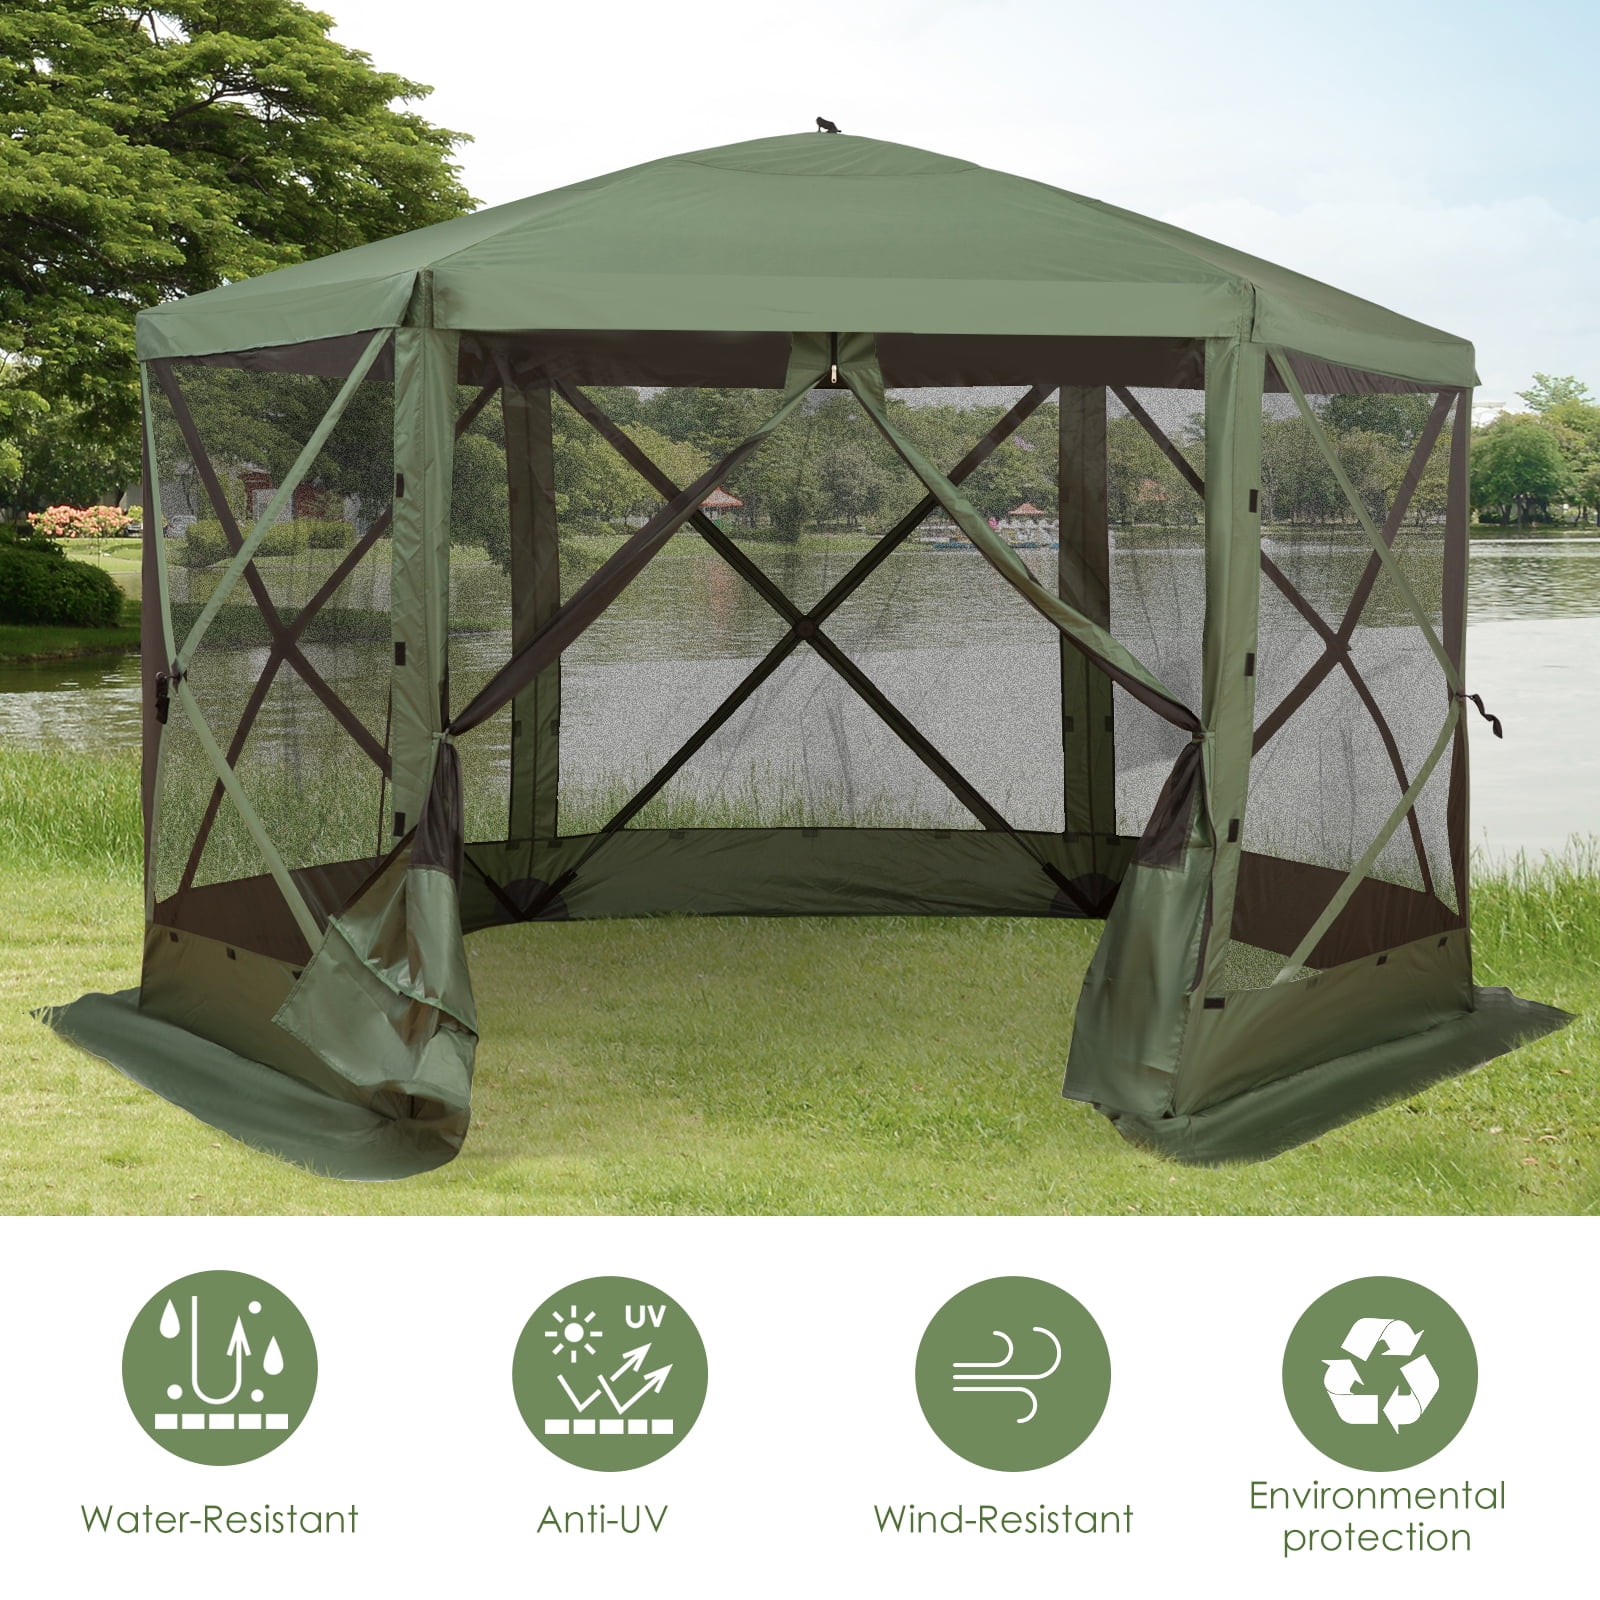 Details about   Outsunny 12.5'x12.5' Pop Up Gazebo Hexagonal Canopy Tent w/ Mesh Sidewalls 